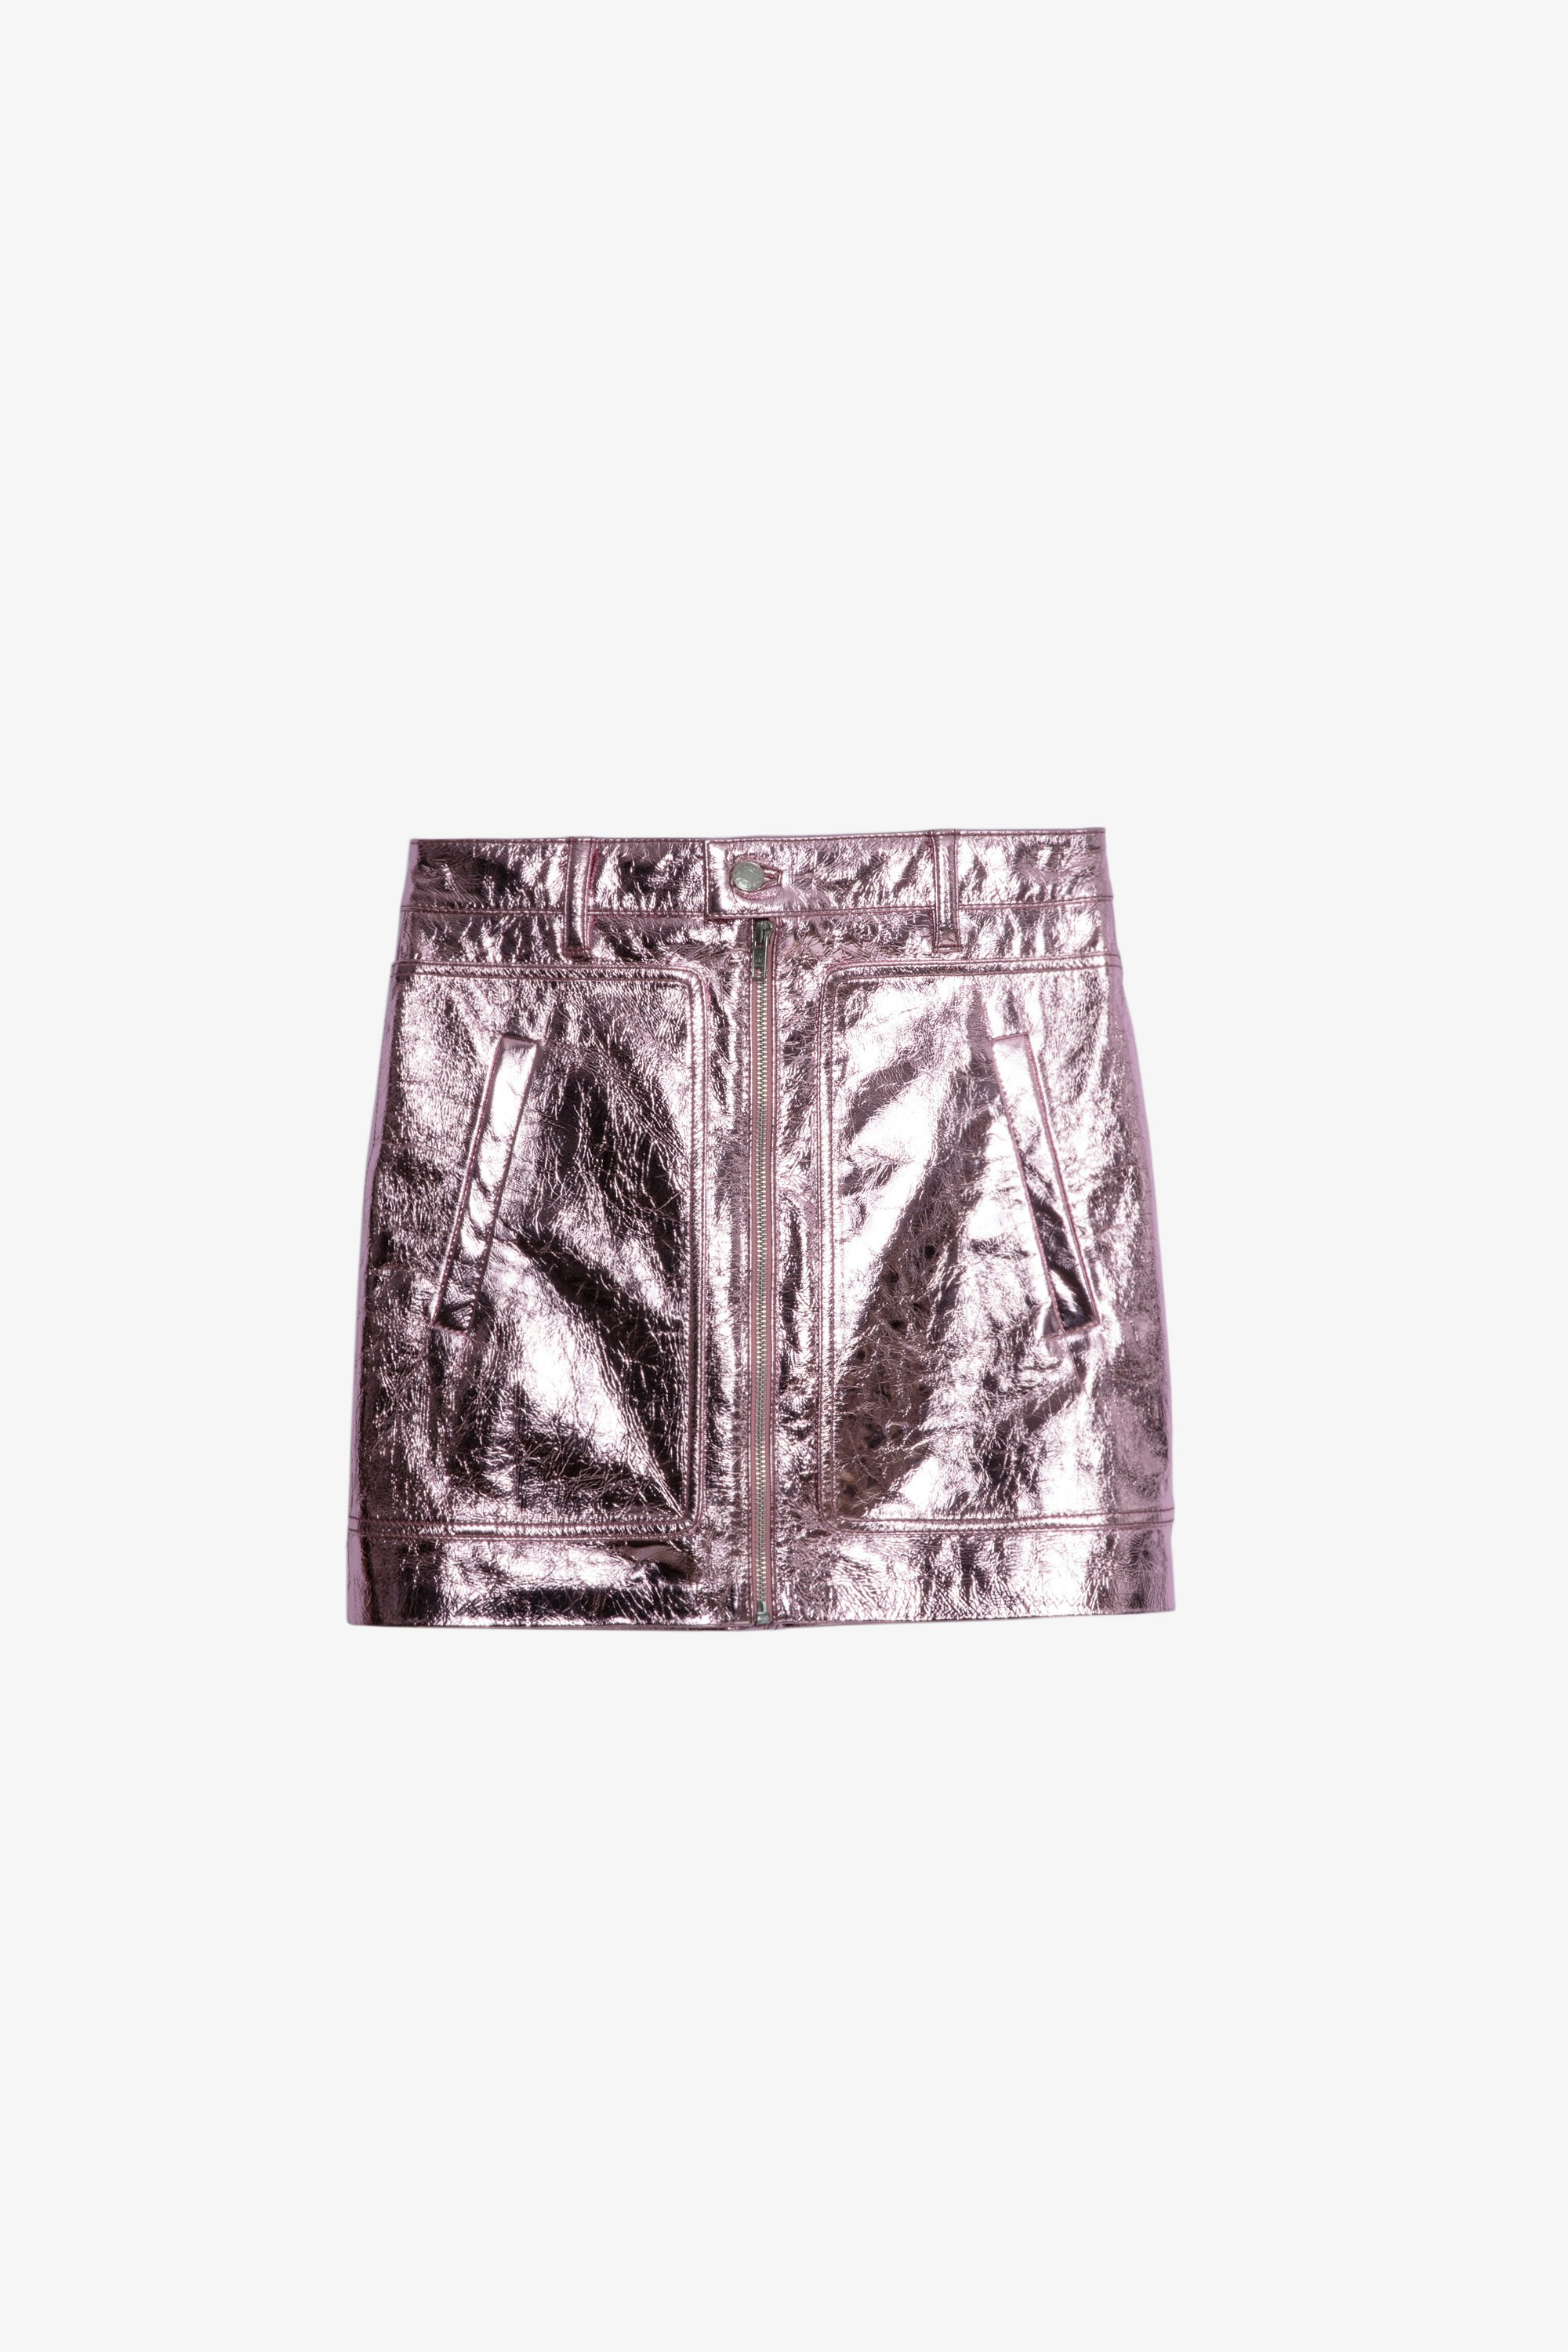 Leather John スカート Women’s pink metallic leather short skirt